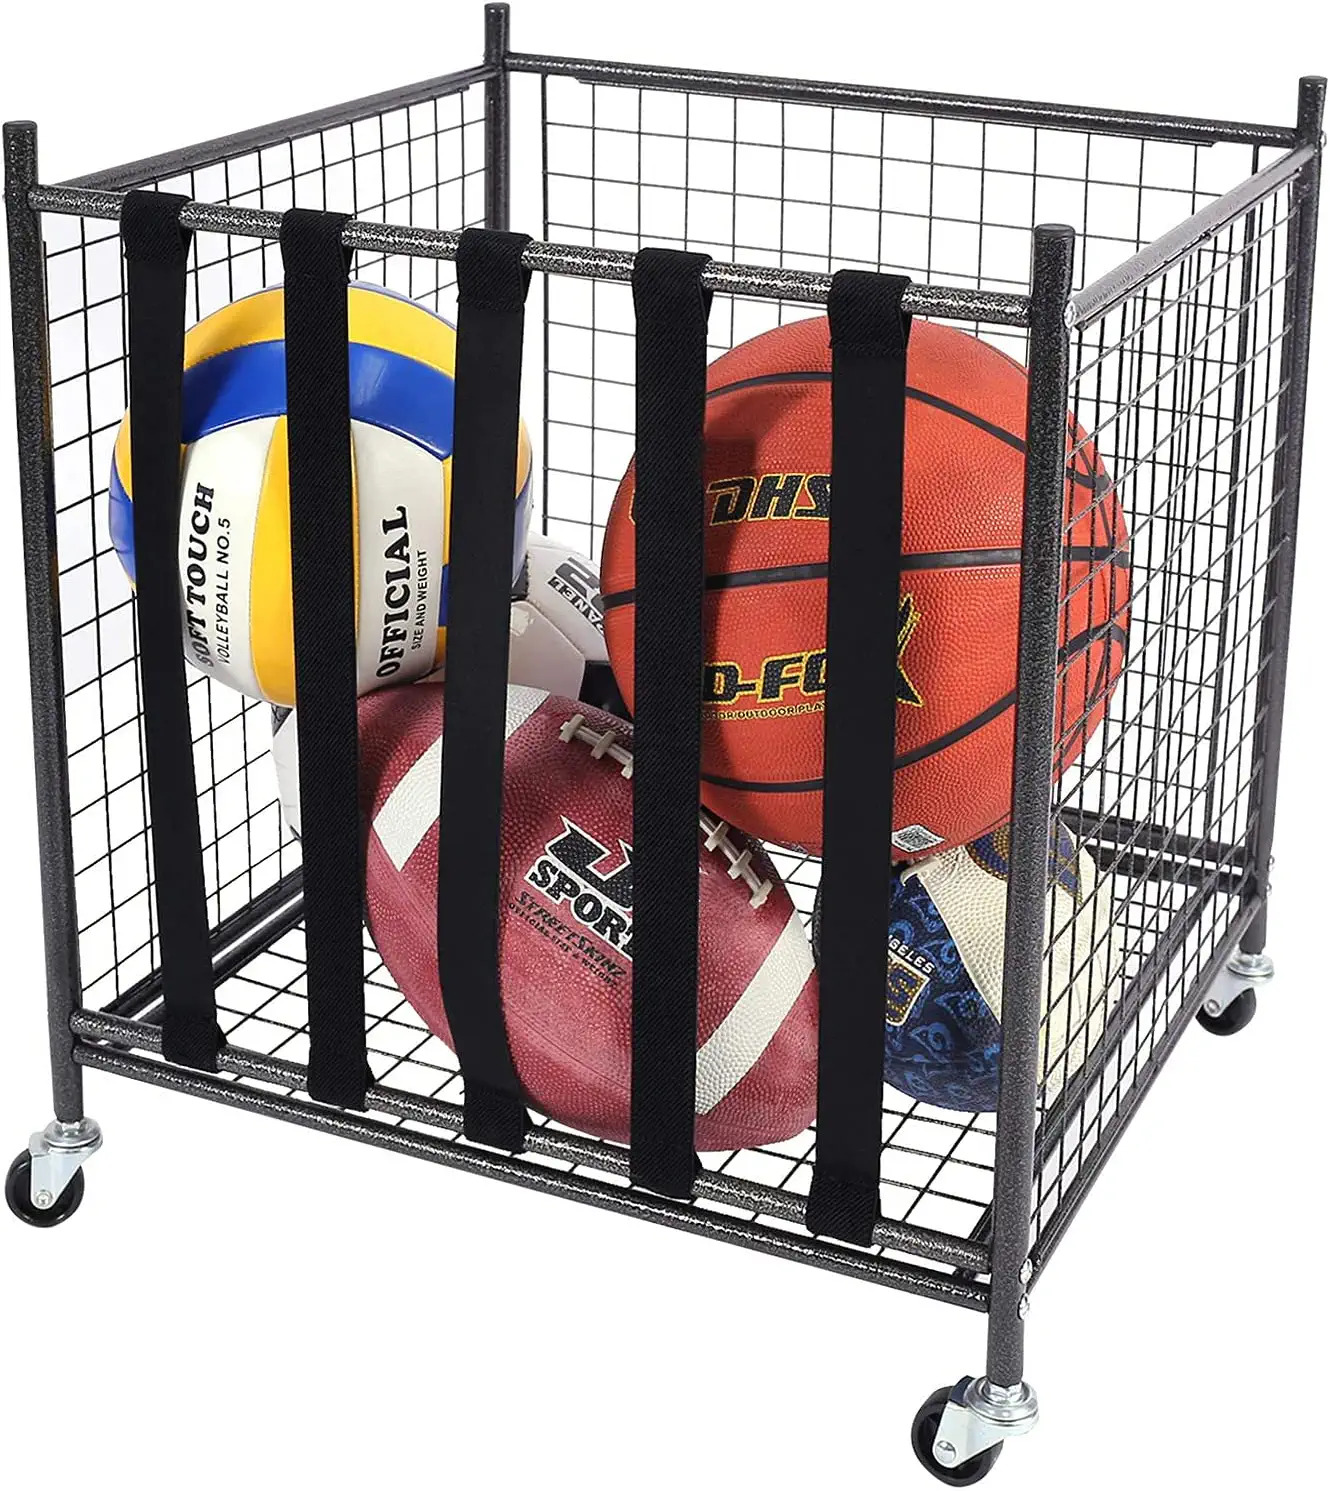 Mythinglogic Rolling Sports Ball Storage Cart Sport Lockable Ball Storage Locker